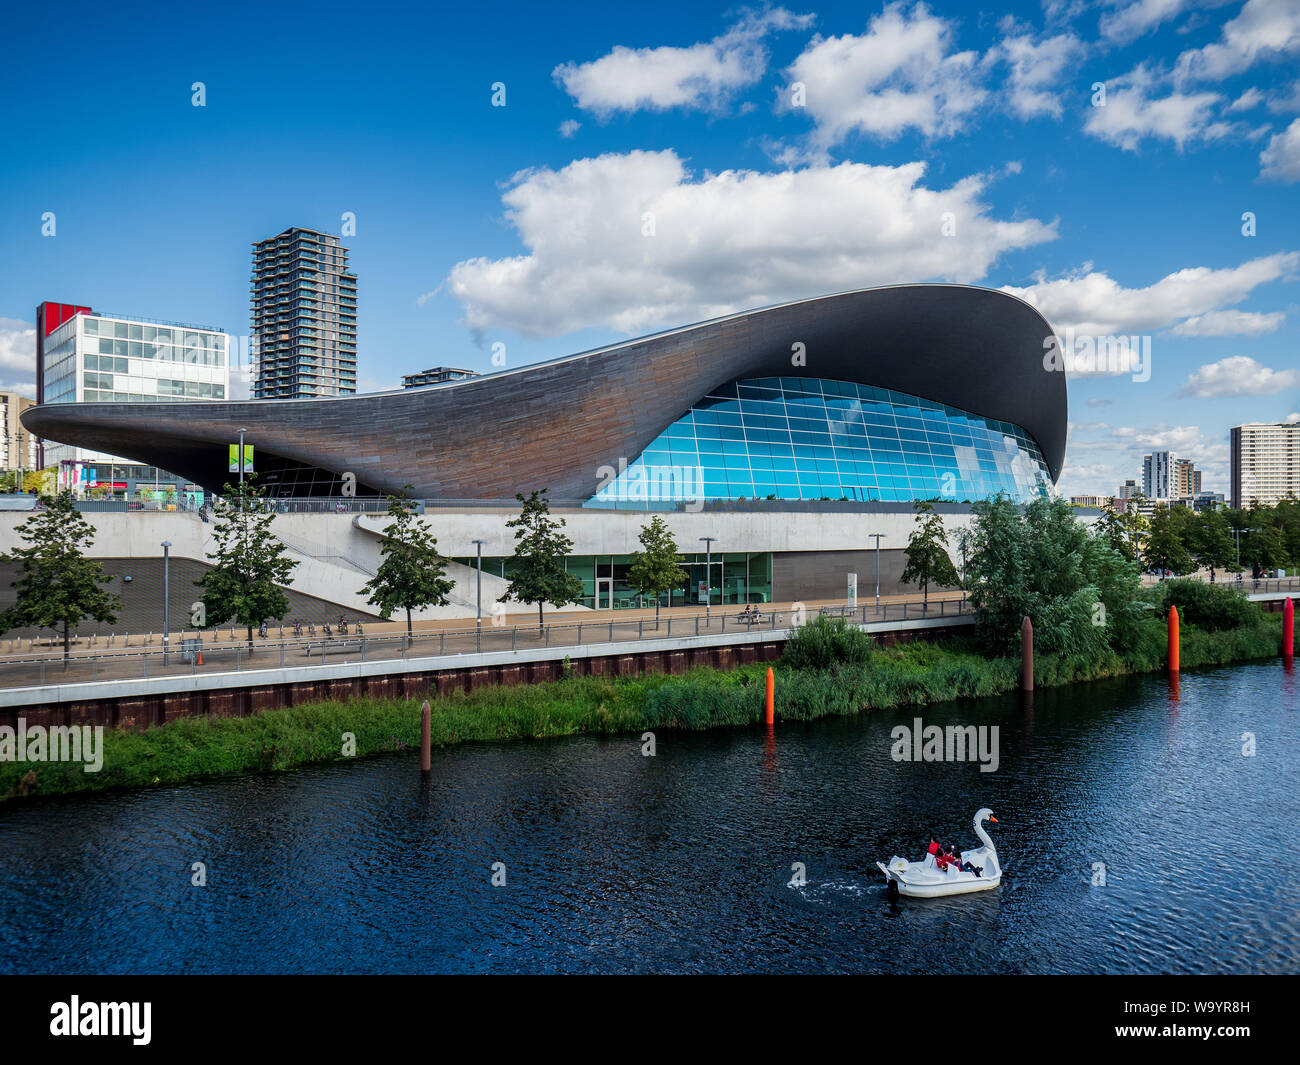 Zaha Hadid London Aquatics Centre - Olimpiadi di Londra piscine per 2012 Olimpiadi - Zaha Hadid Architects. Completato nel 2011, costa £269 milioni. Foto Stock